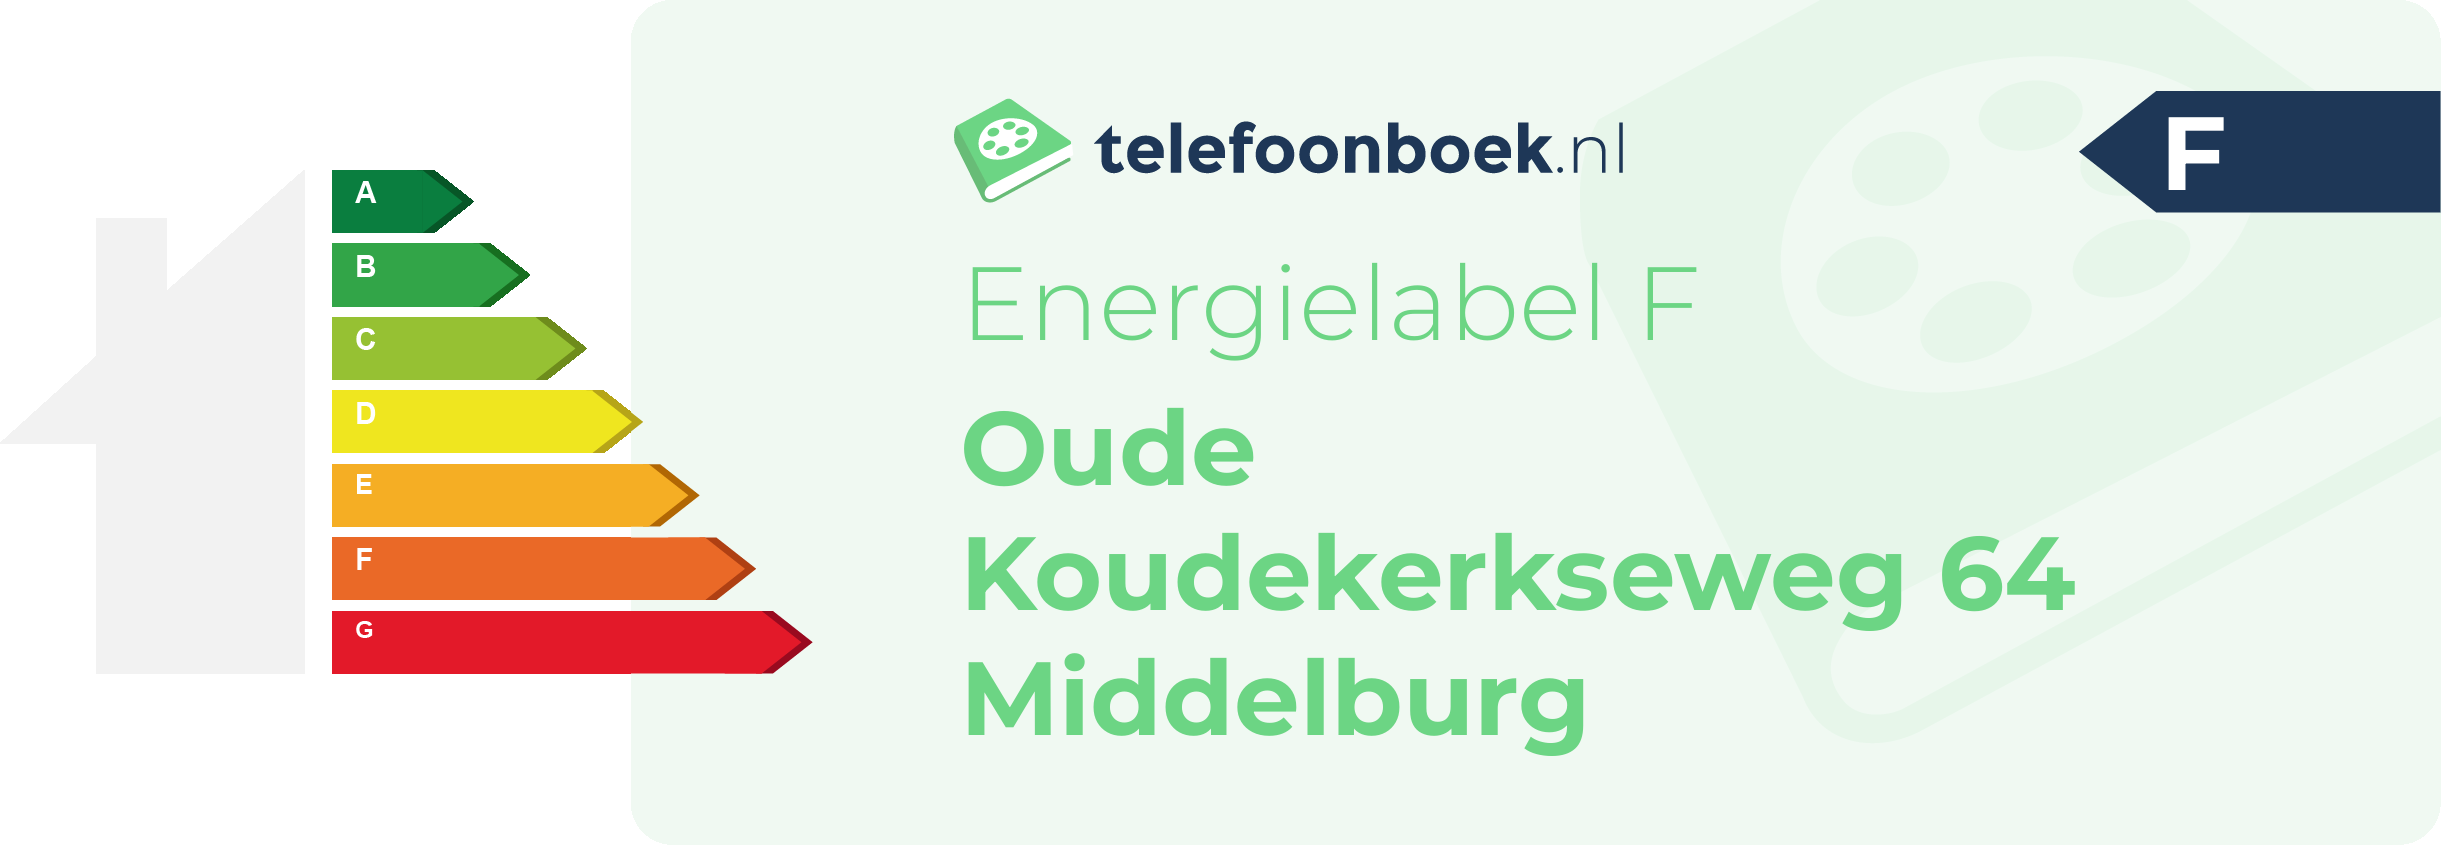 Energielabel Oude Koudekerkseweg 64 Middelburg